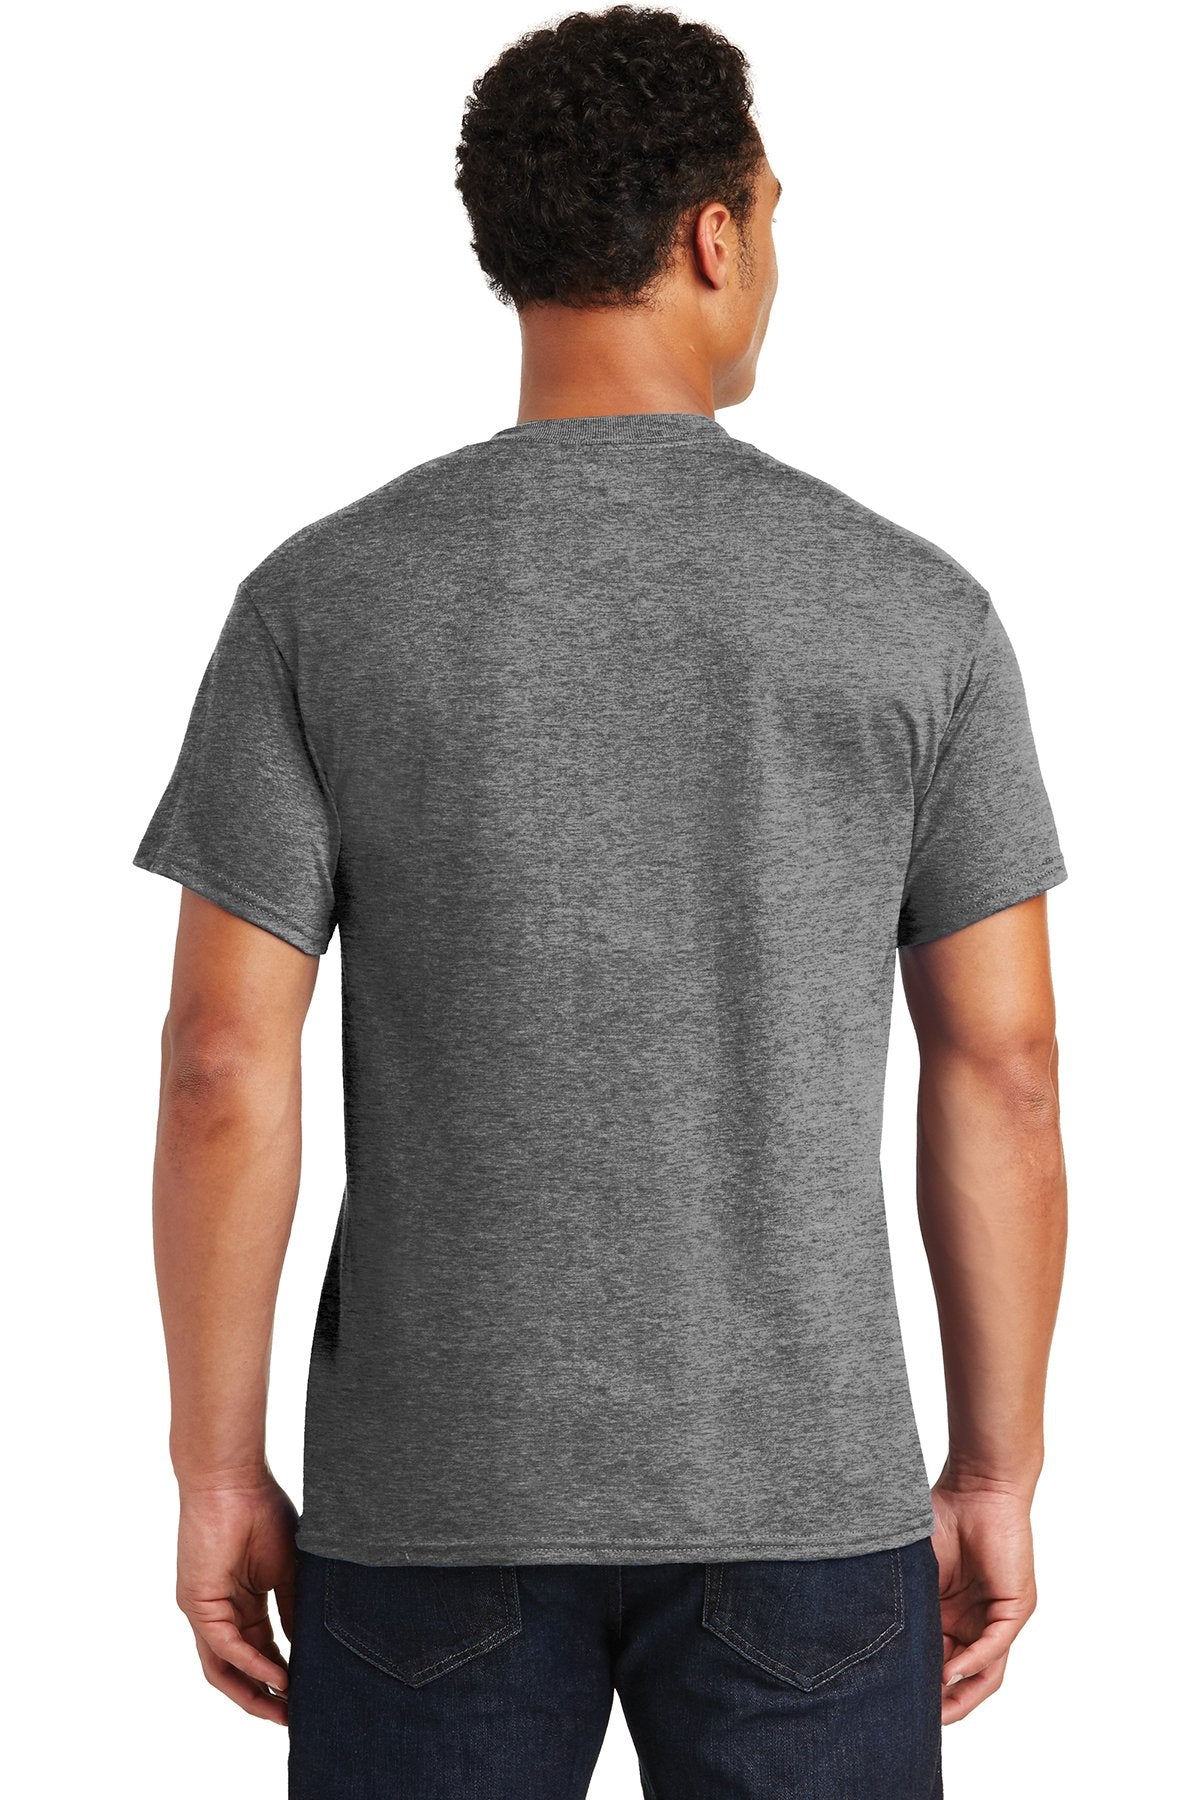 gildan dryblend cotton poly t shirt 8000 graphite heather